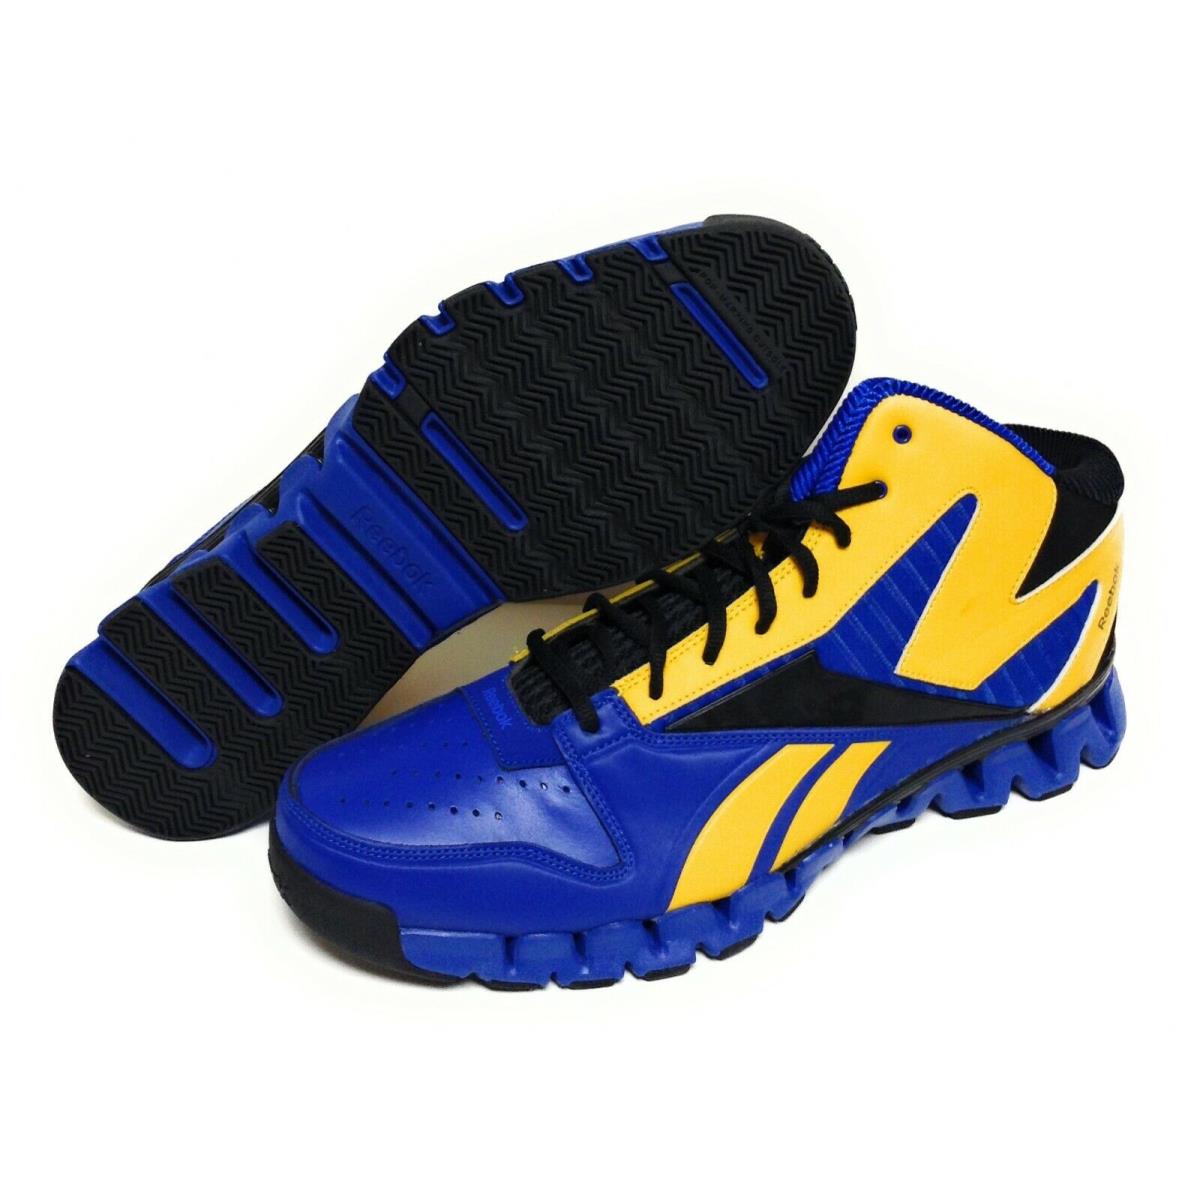 Mens Reebok Zig Nano Pro Fury V44519 Blue Sample Basketball Sneakers Shoes - Blue, Manufacturer: Royal Blue